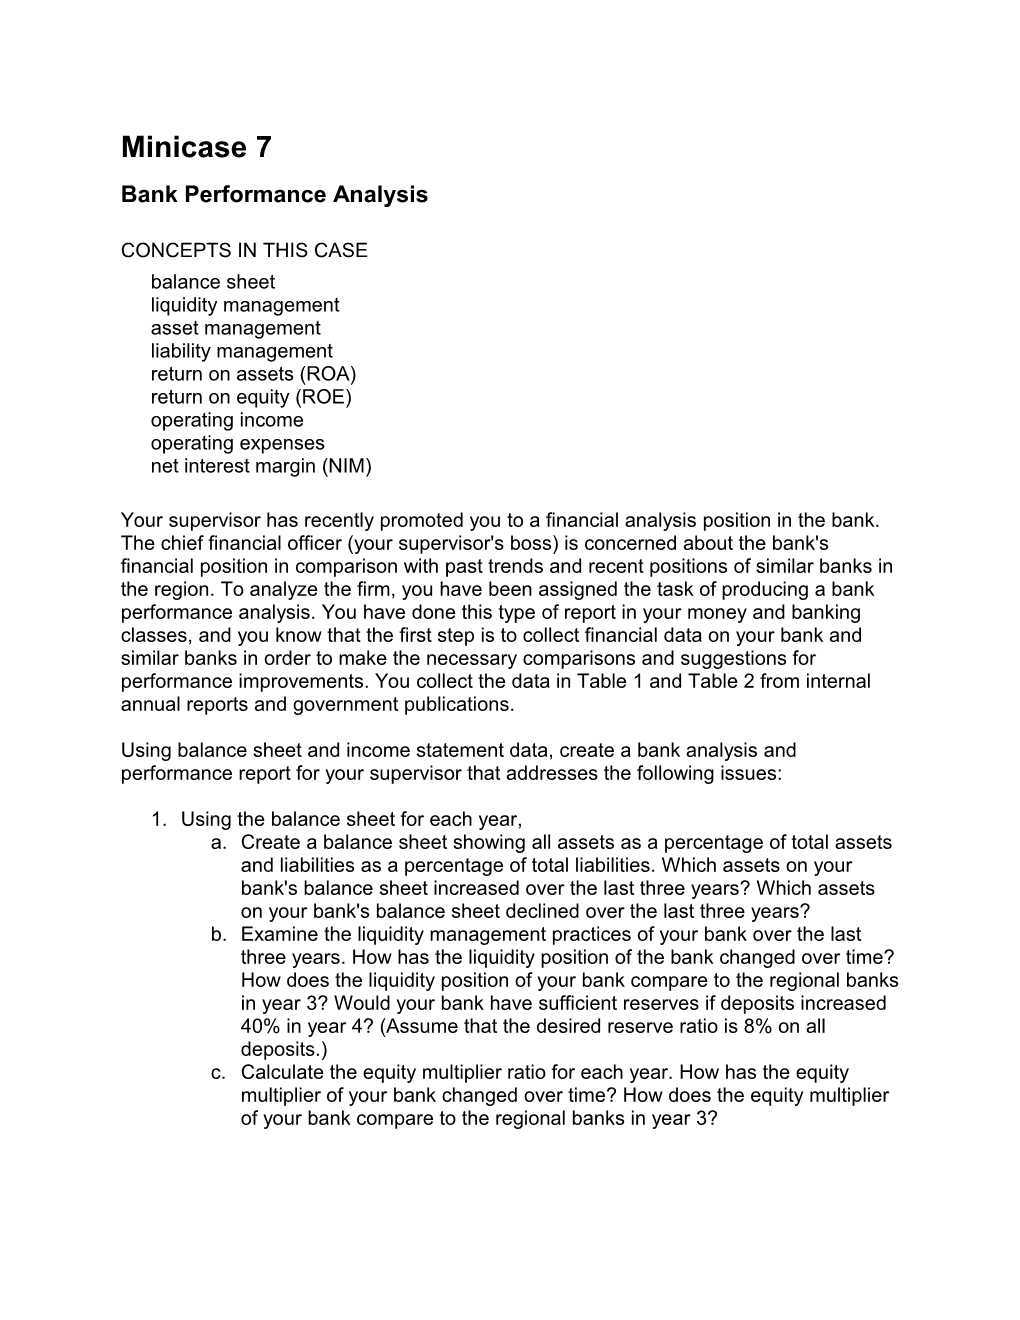 Bank Performance Analysis